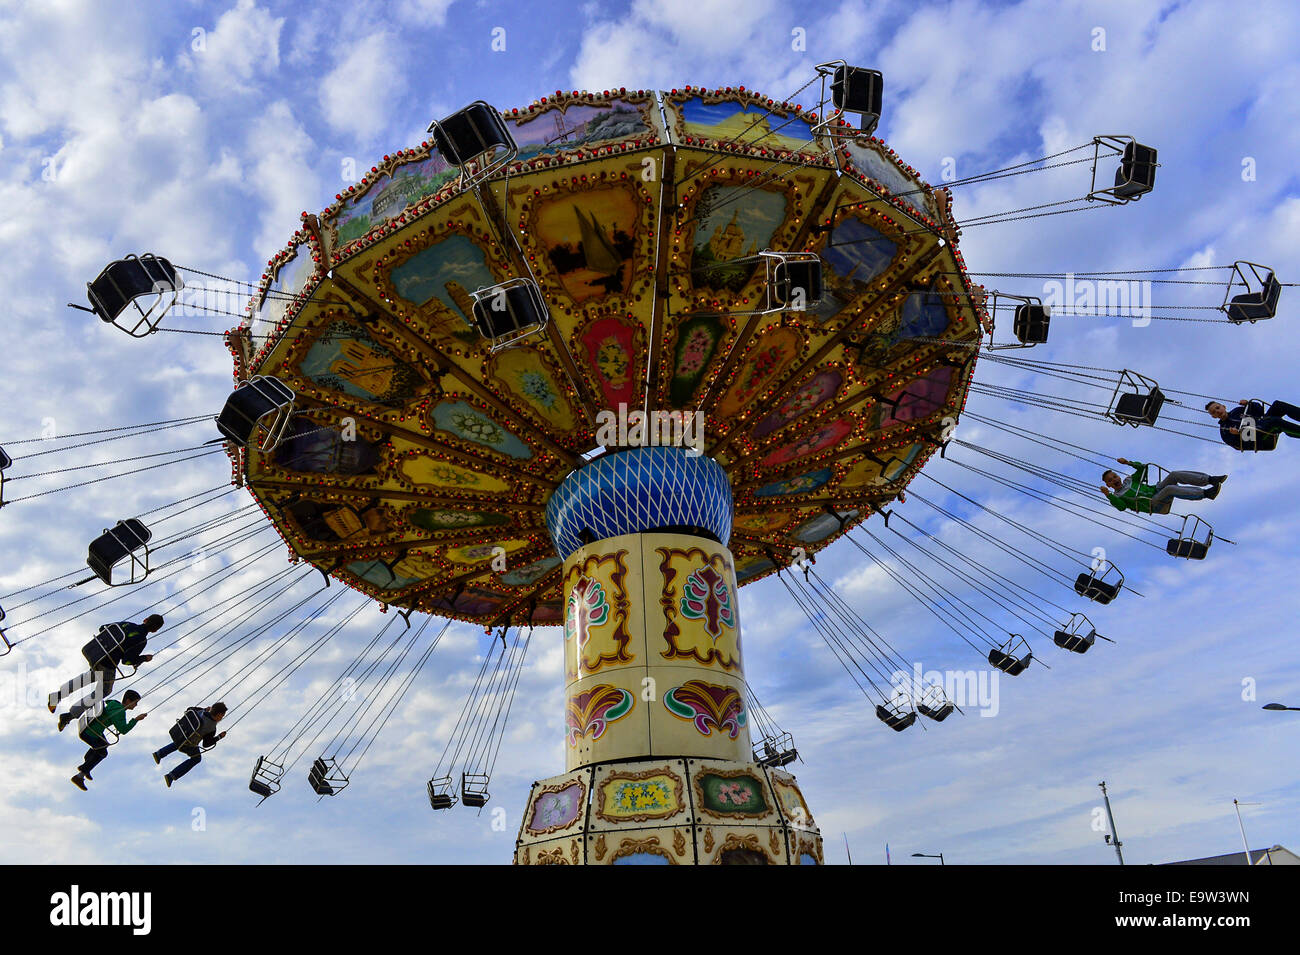 Stock Foto - Festplatz drehenden Karussell.  © George Sweeney/Alamy Stockfoto